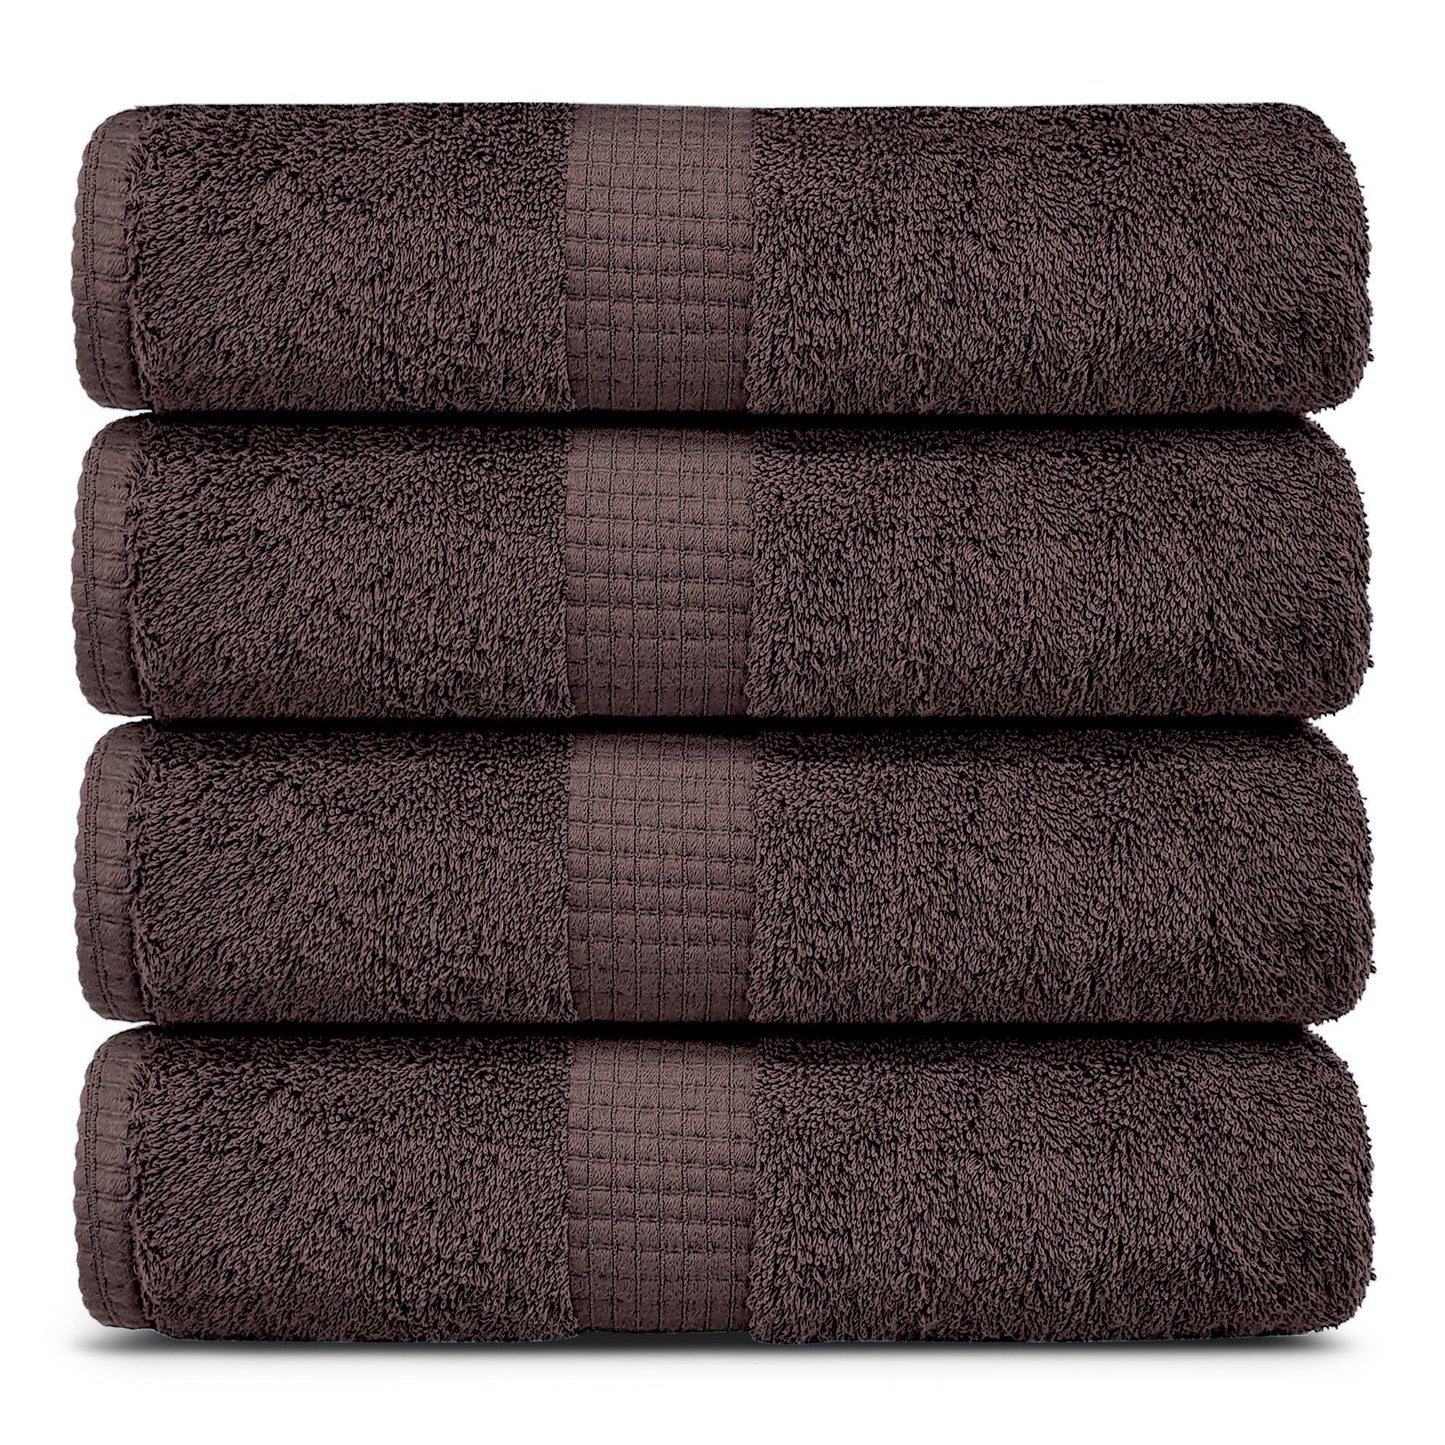 Lavish Touch 100% Cotton 600 GSM Melrose Towel Set - Kea Global